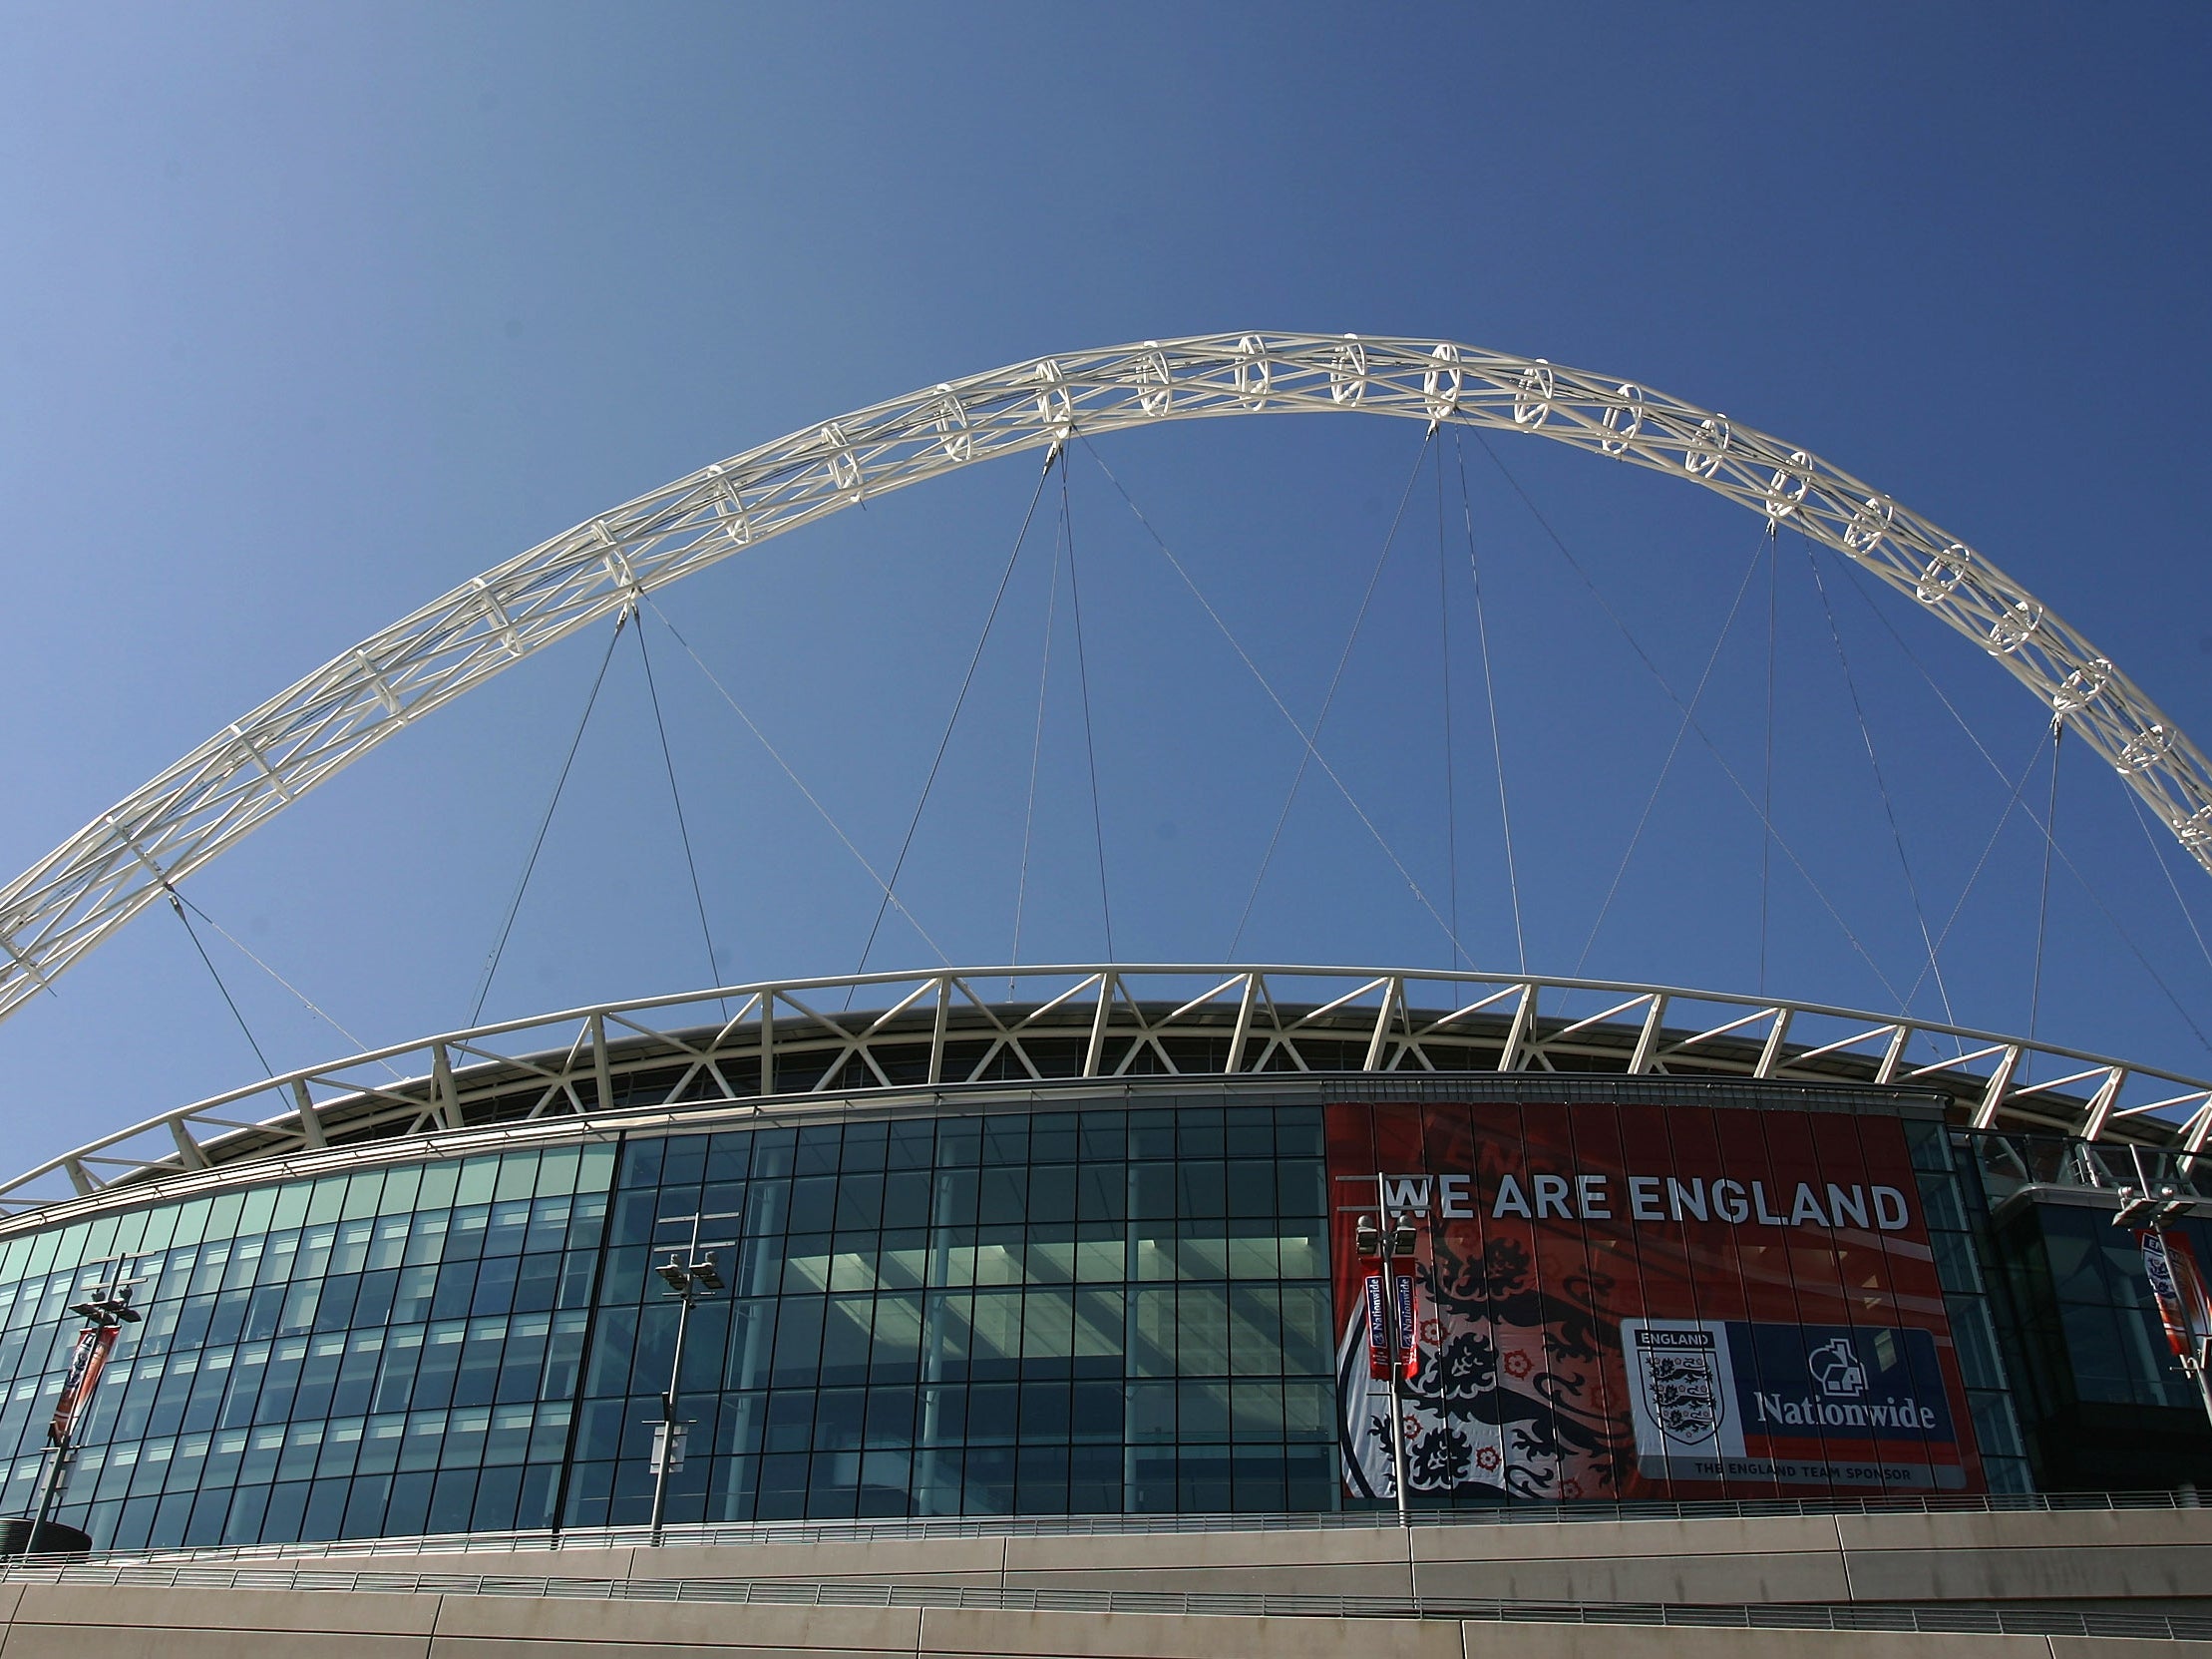 The FA's headquarters at Wembley Stadium